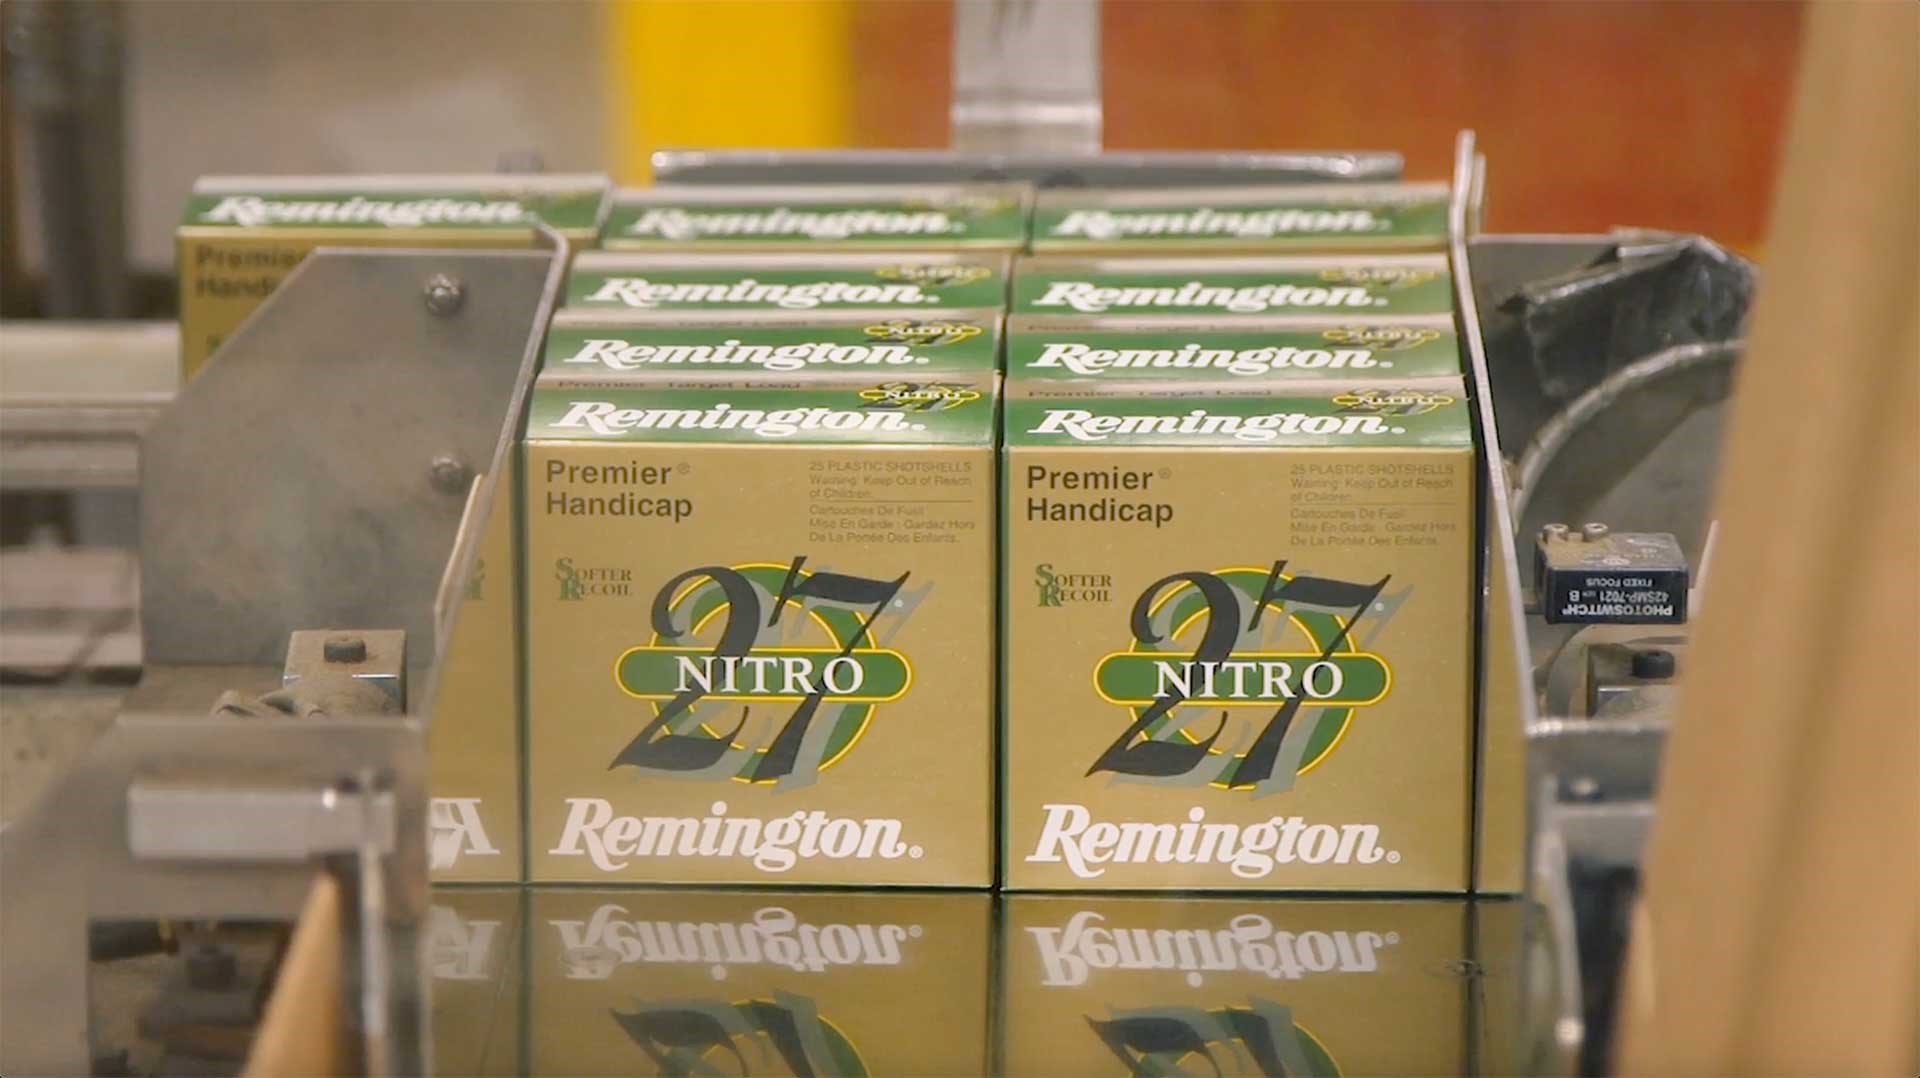 Boxes of Remington Nitro 27 shotshells